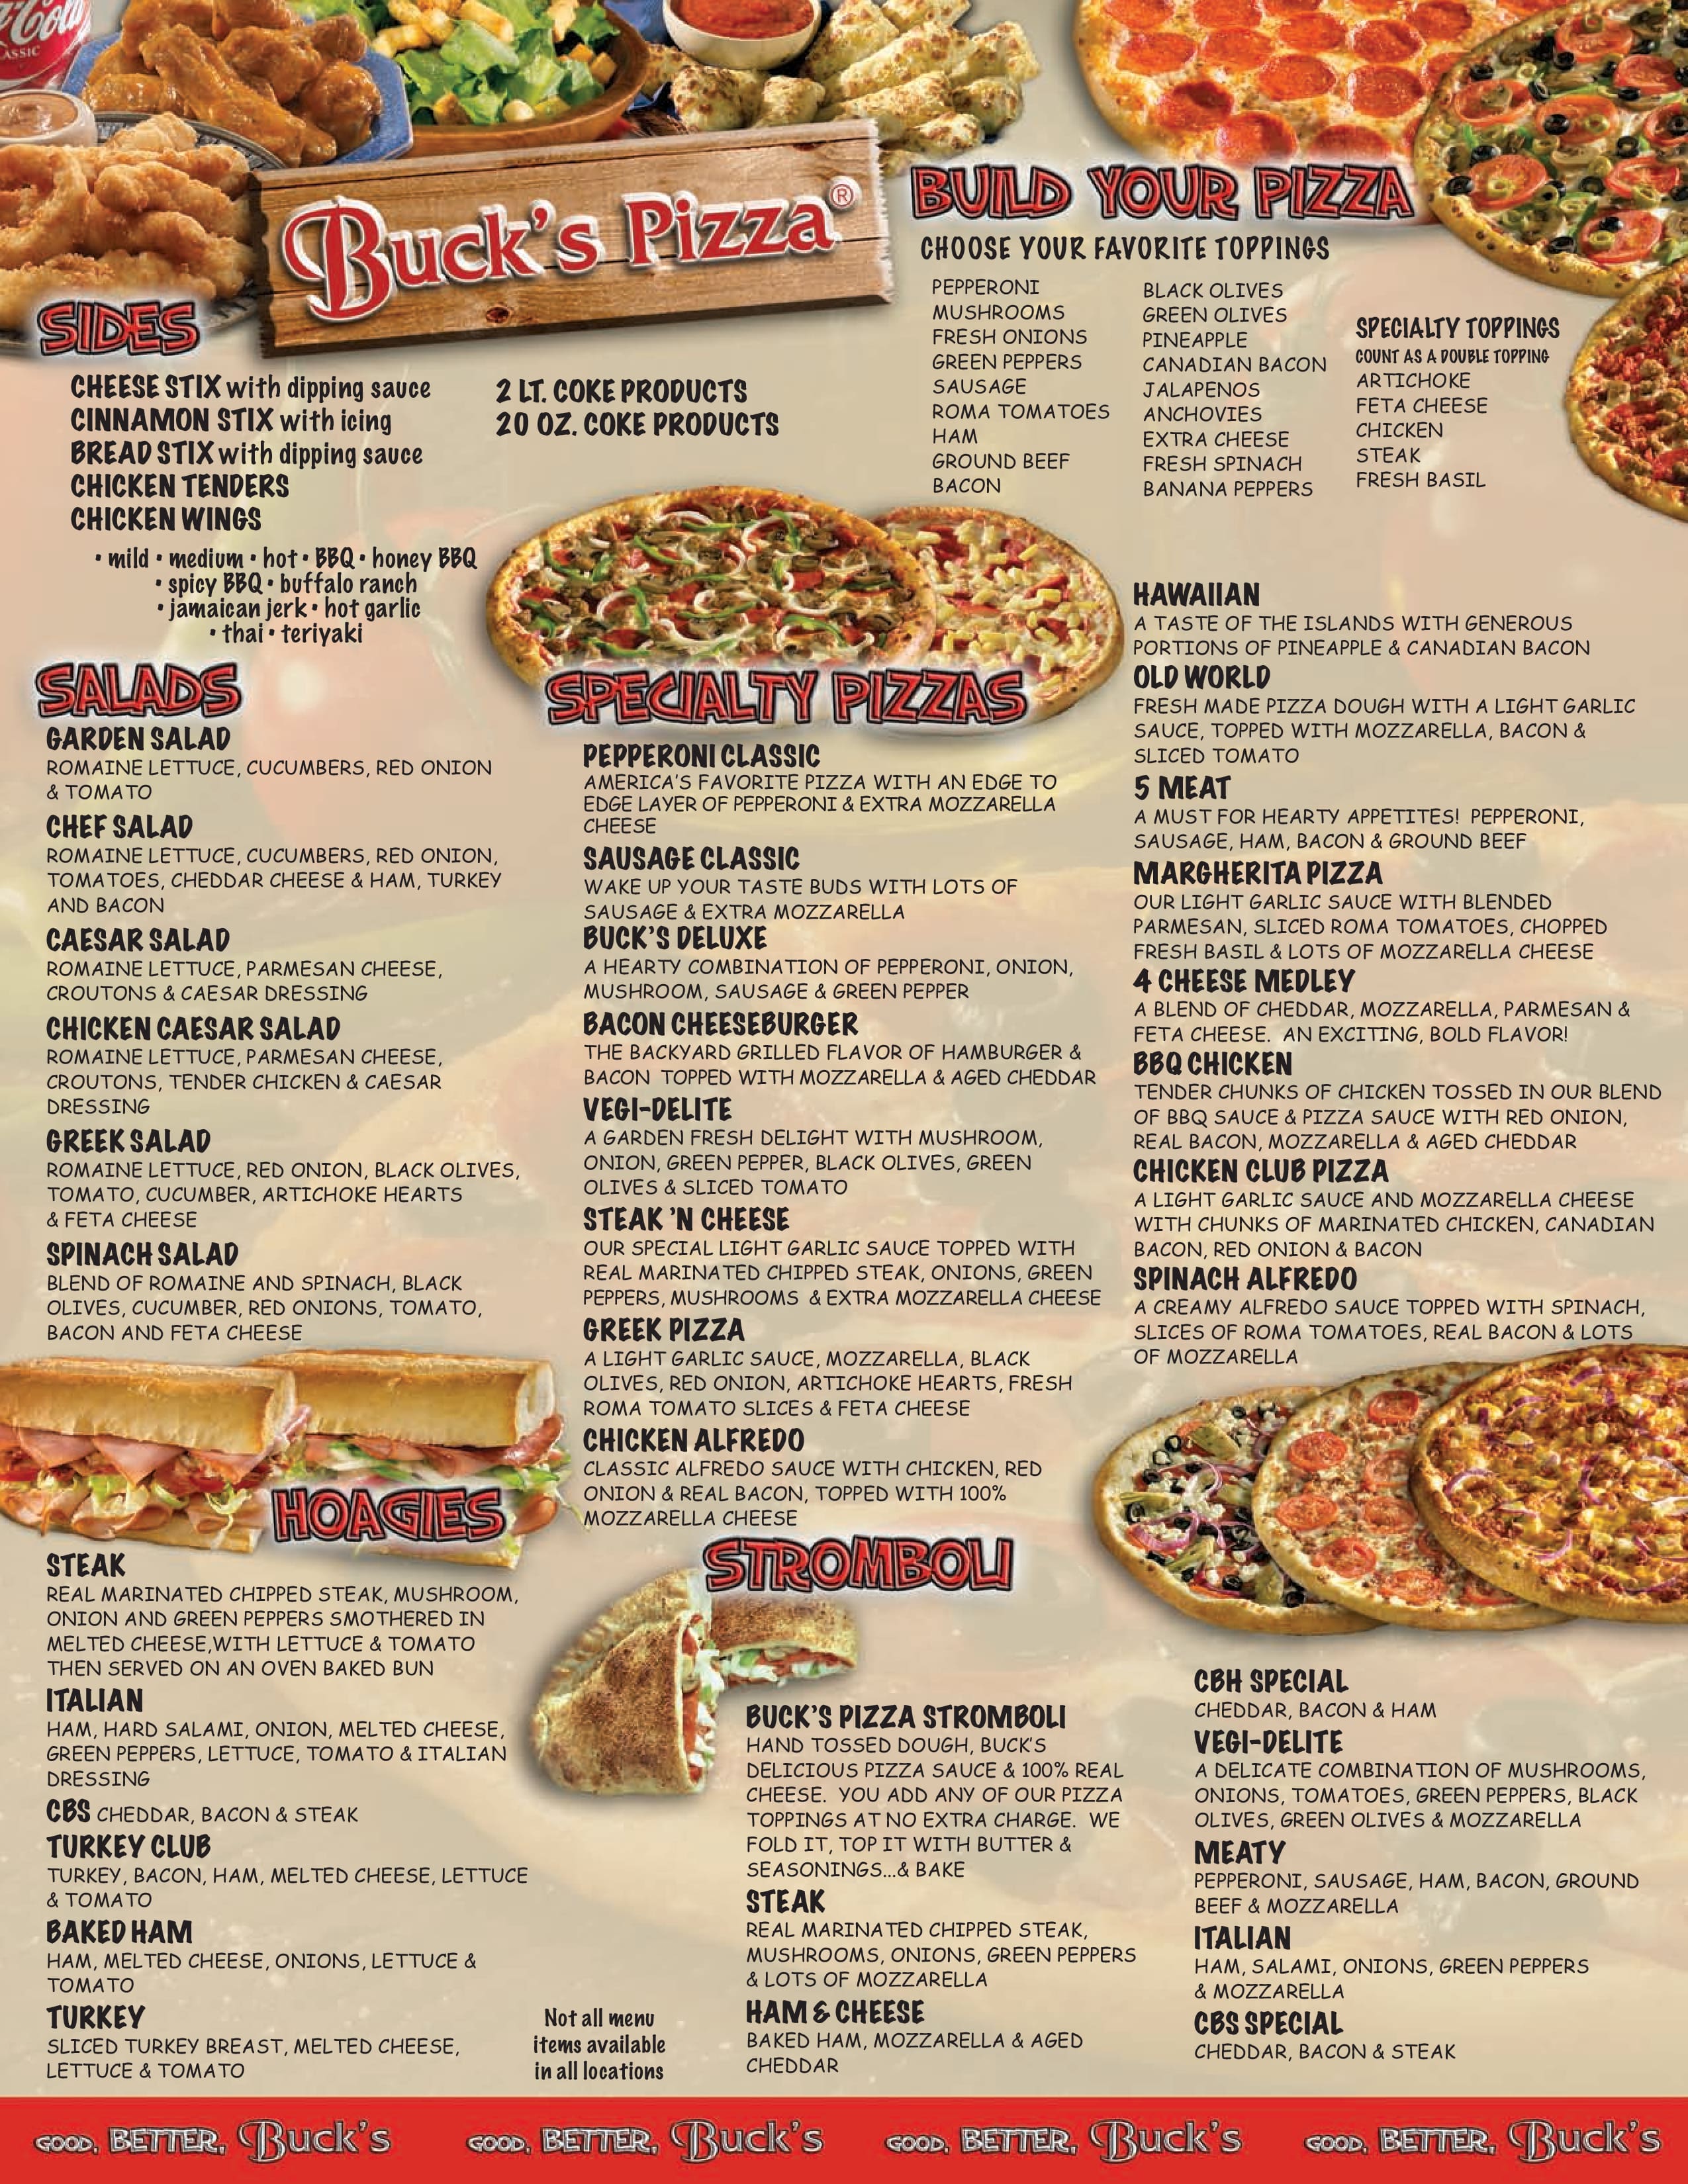 Bucks Pizza Buck's pizza, located in gloversville, new york, is at